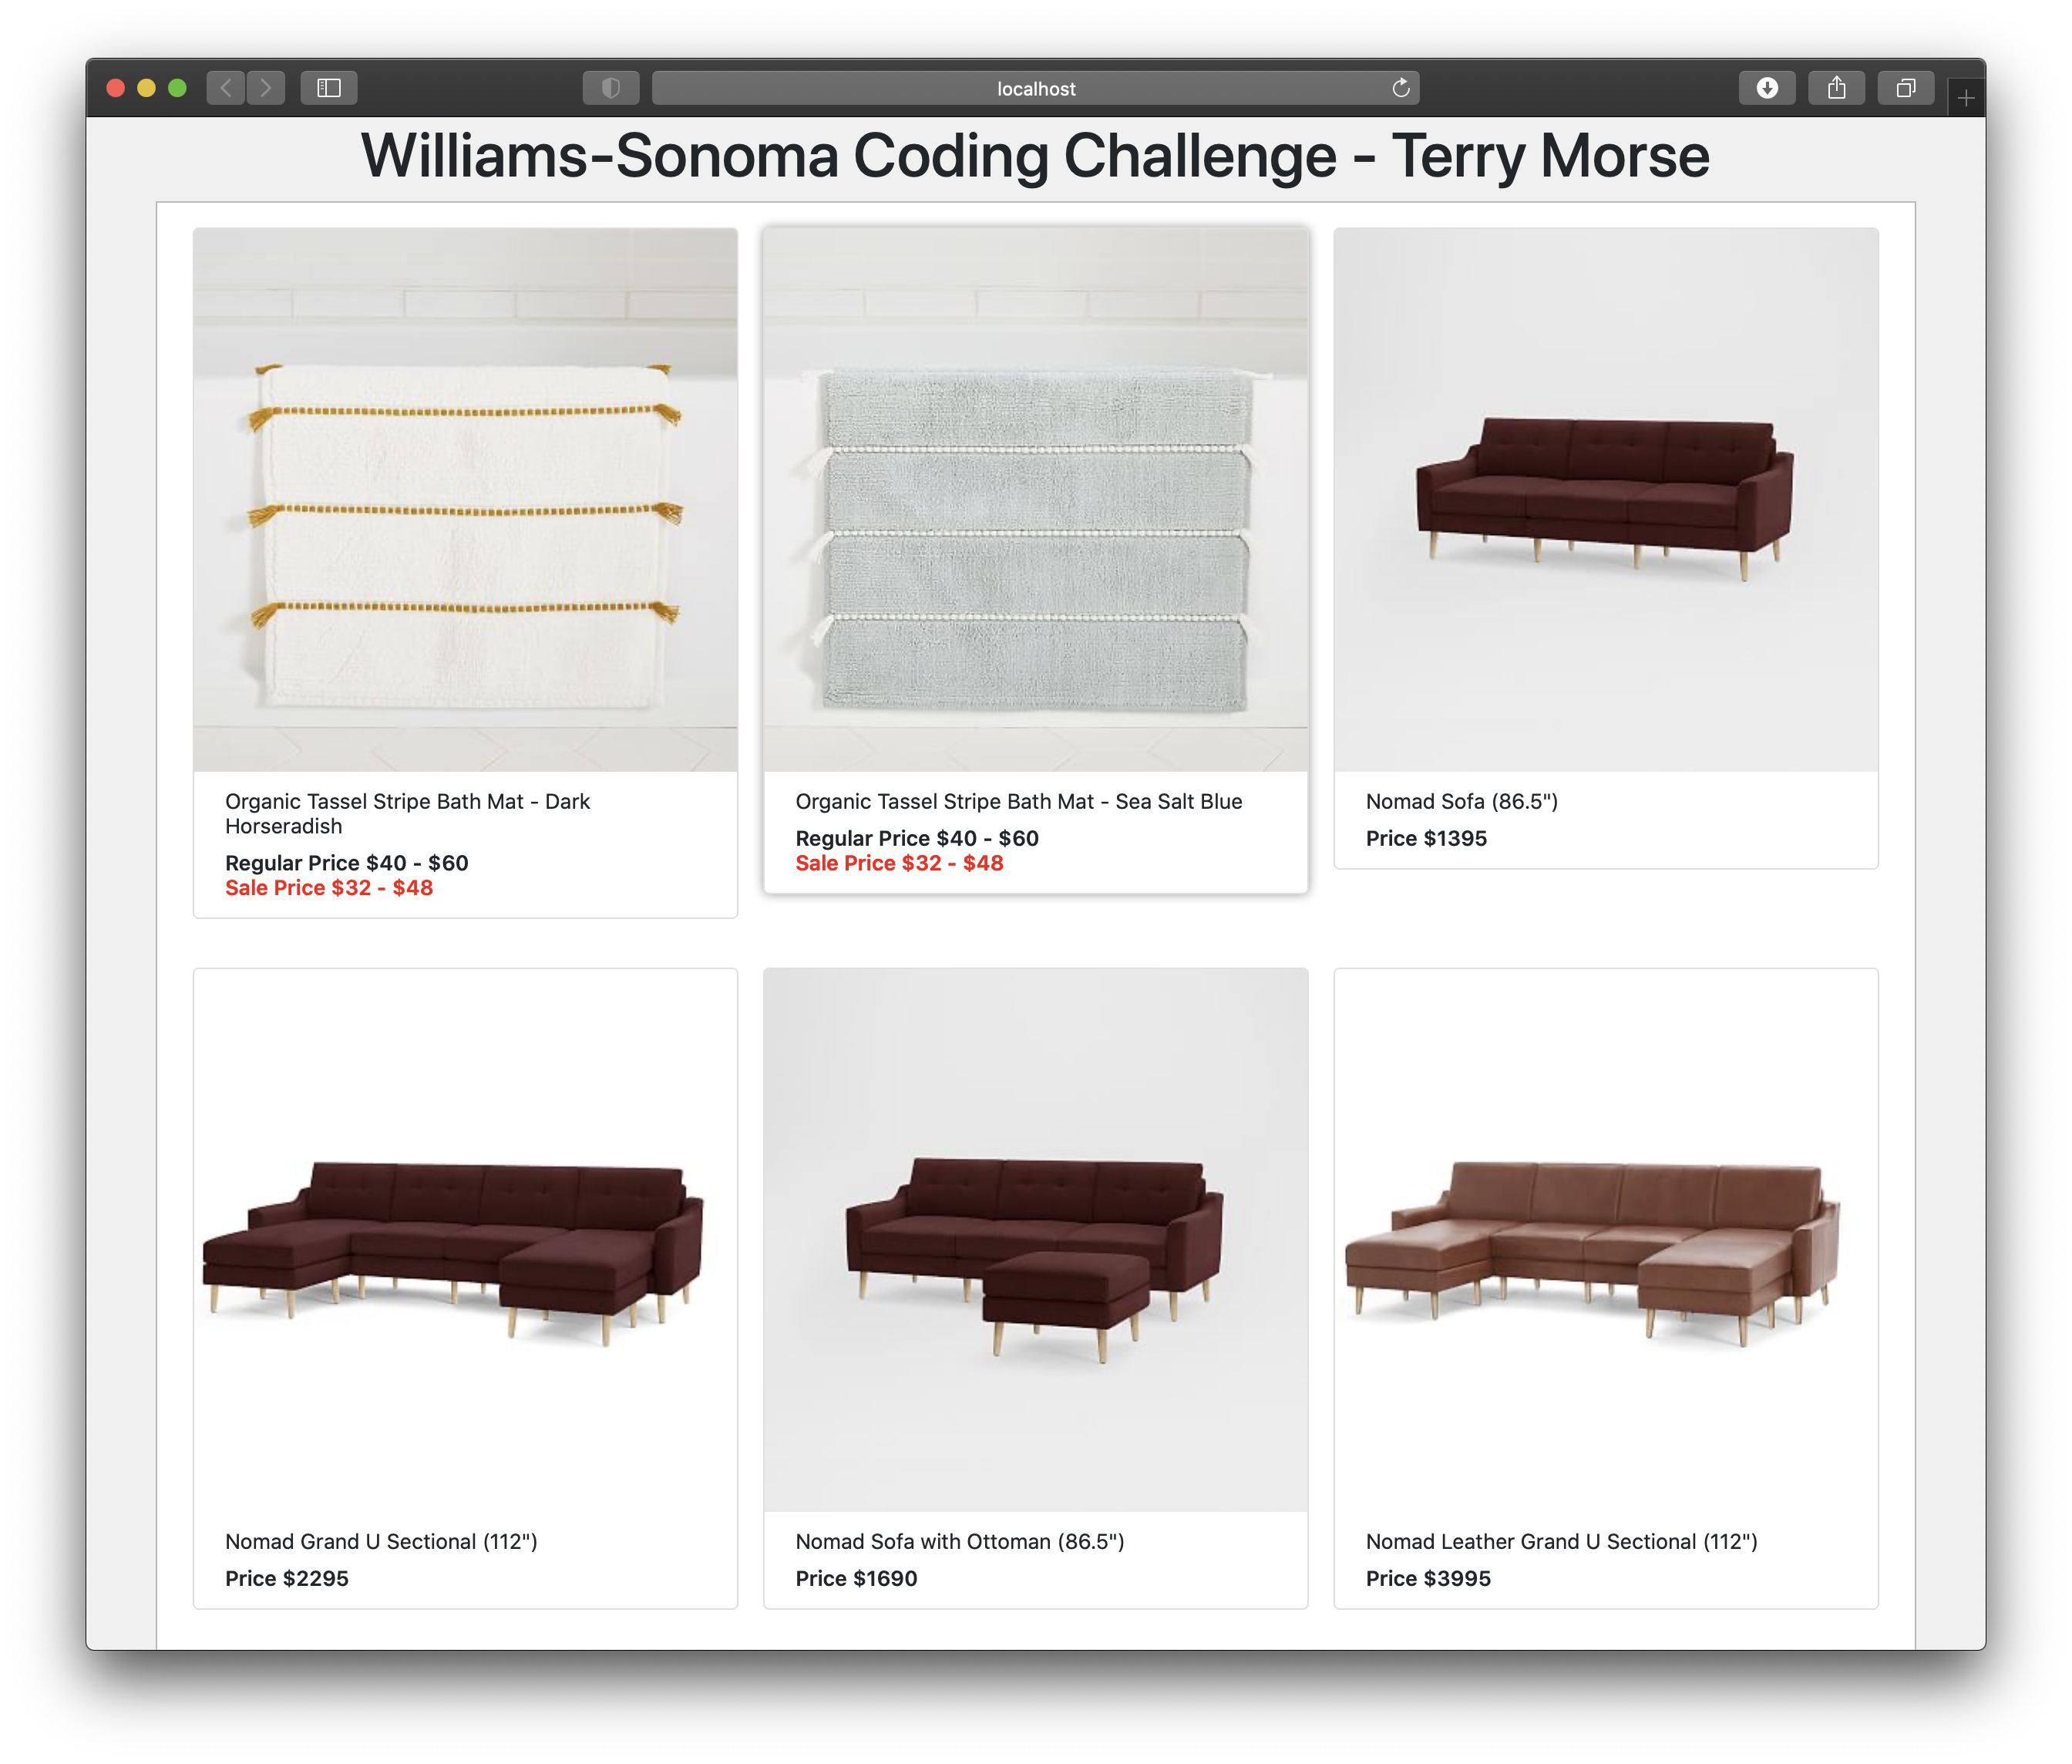 Williams-Sonoma Coding Challenge